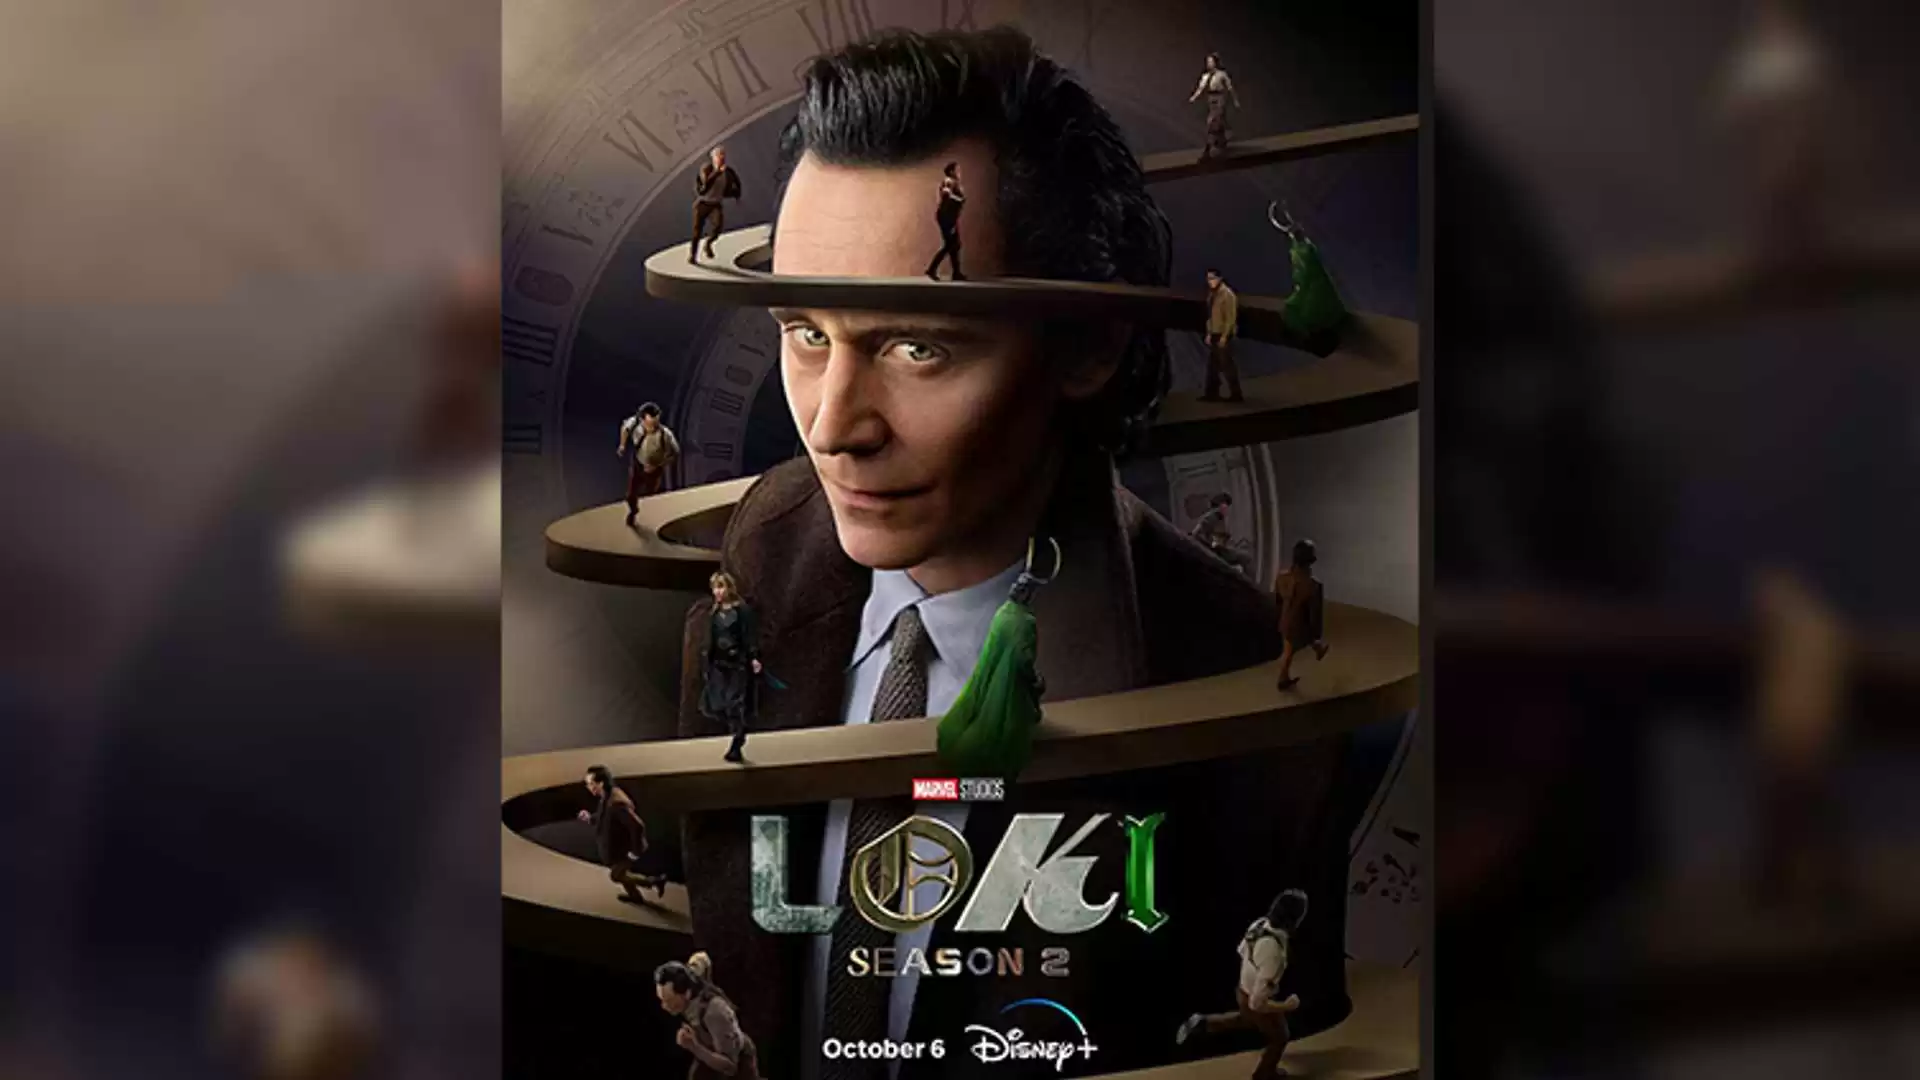 Loki Season 2 Trailer Released Featuring Tom Hiddleston